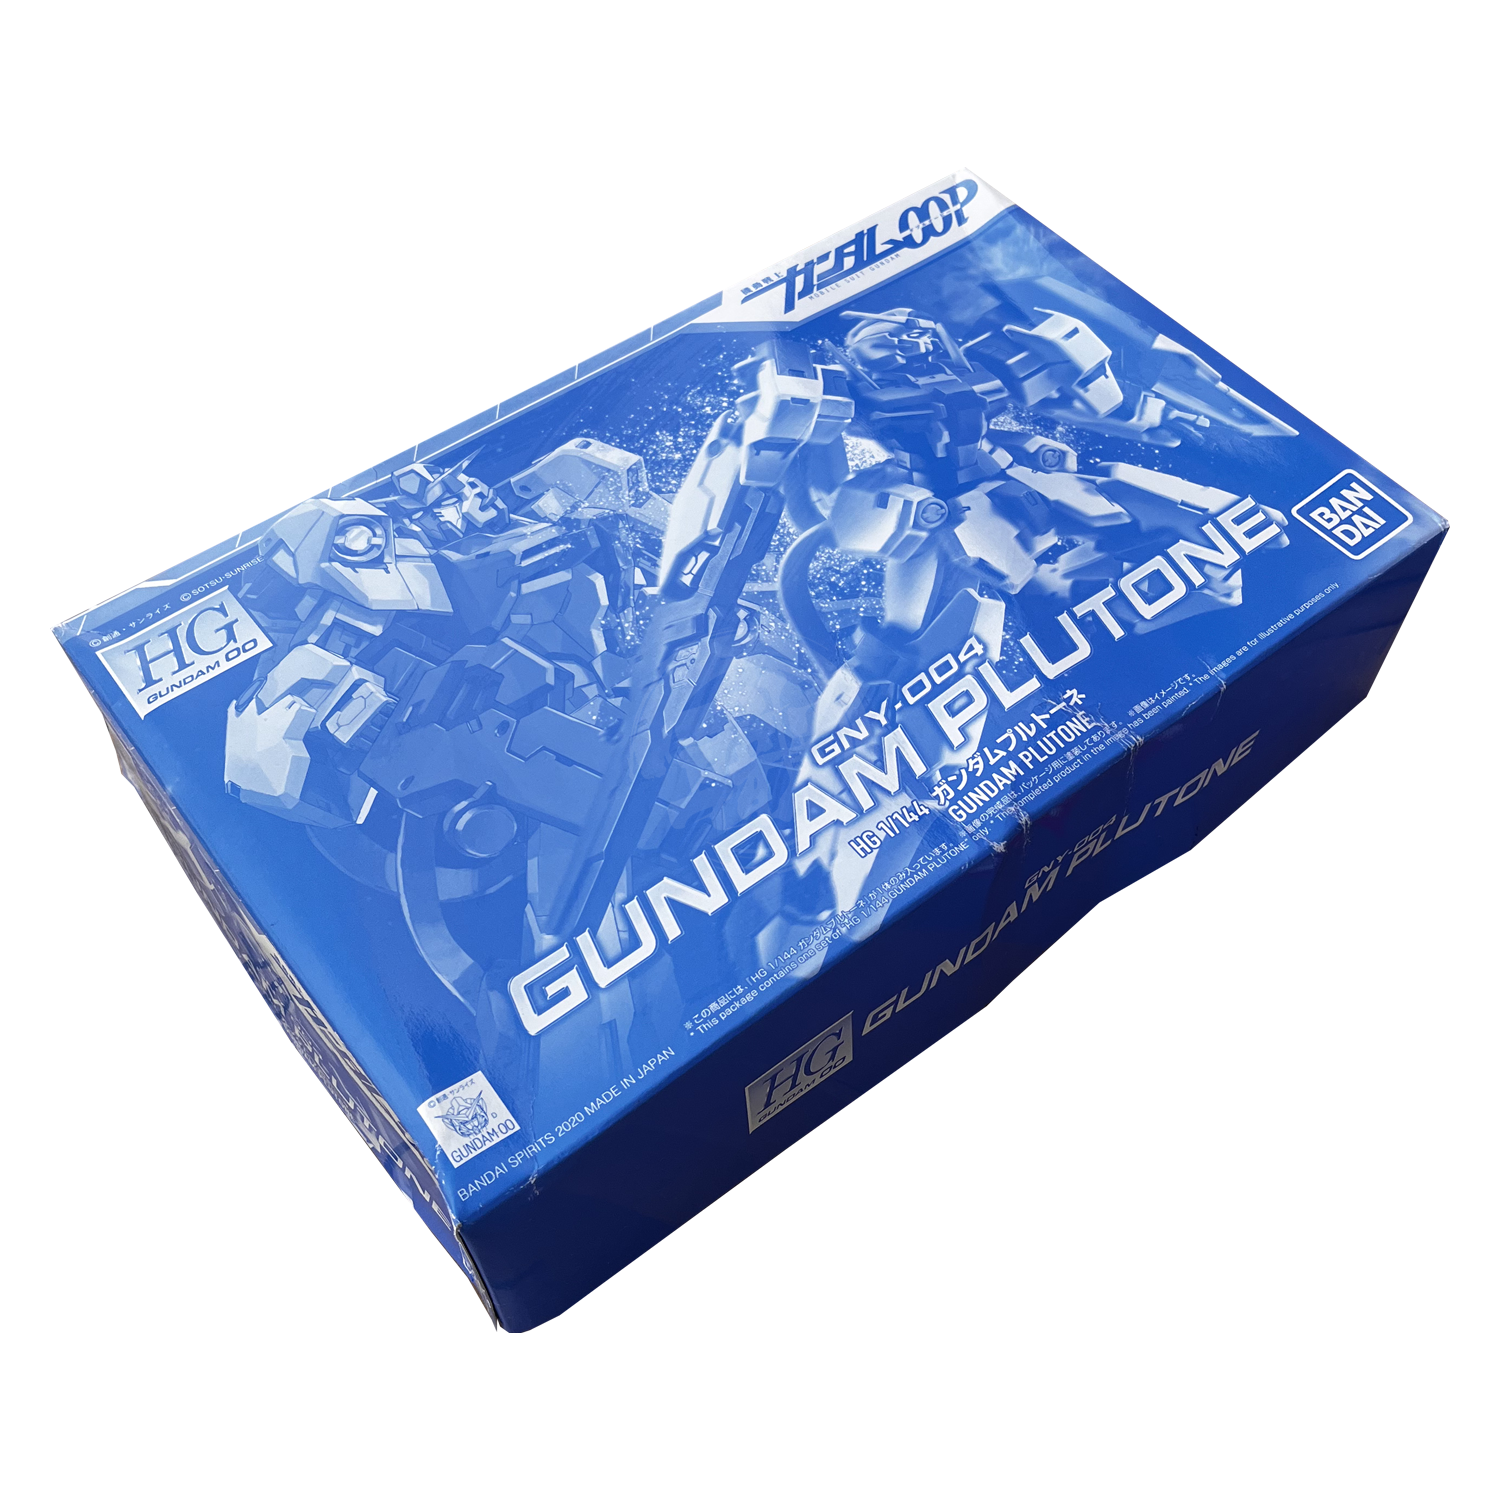 Bandai - HG Gundam Plutone [Damaged Box] - ShokuninGunpla